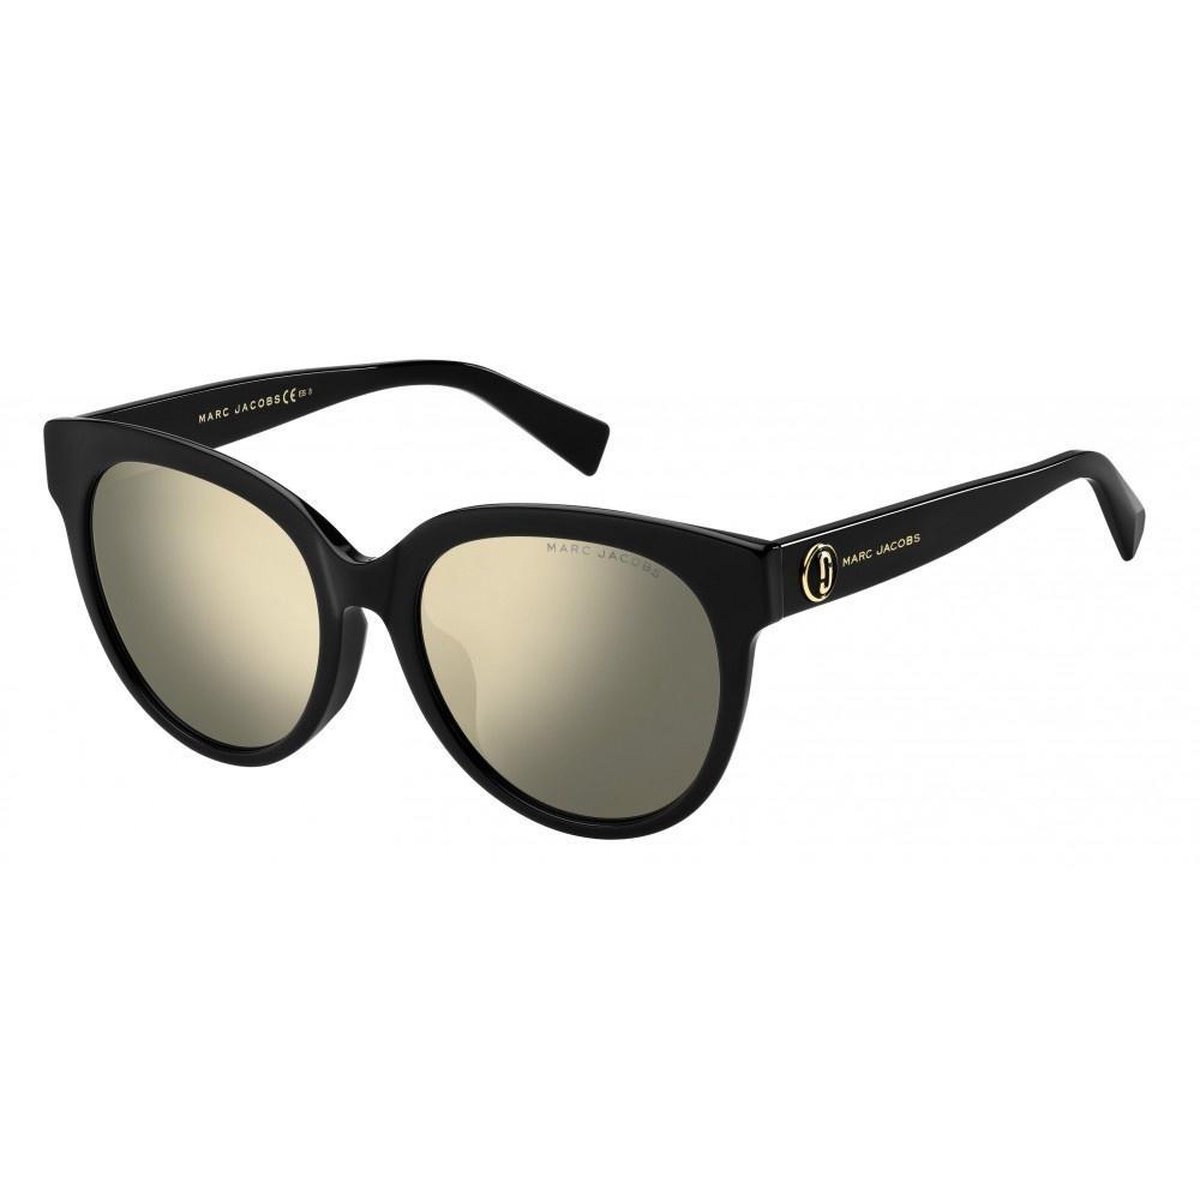 Marc Jacobs Ronde zonnebril zwart-goud elegant Accessoires Zonnebrillen Ronde zonnebrillen 